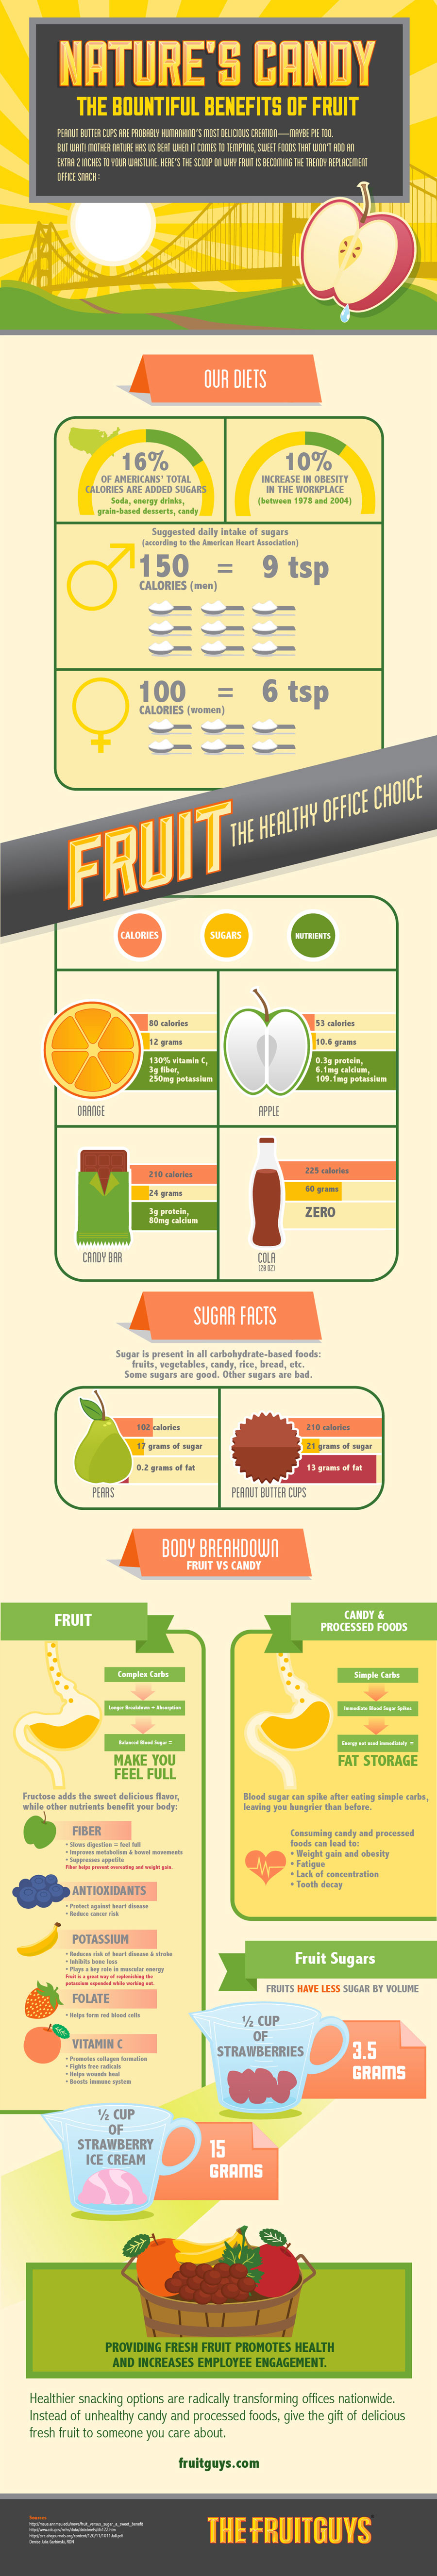 The Bountiful Benefits of Fruit